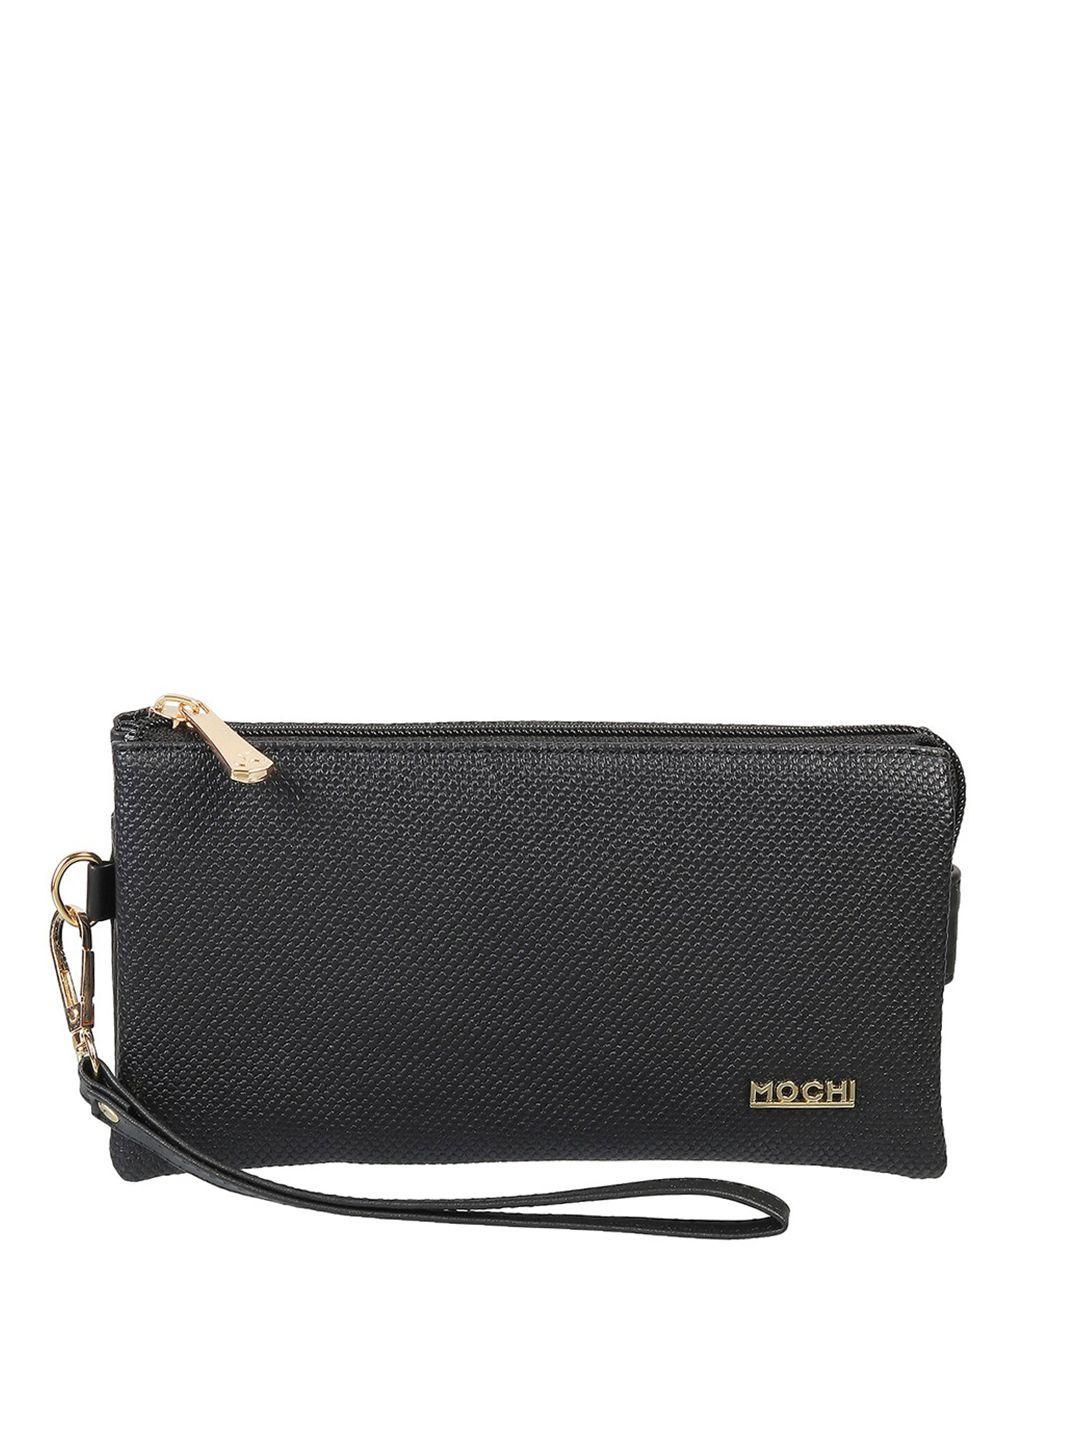 mochi-black-purse-clutch